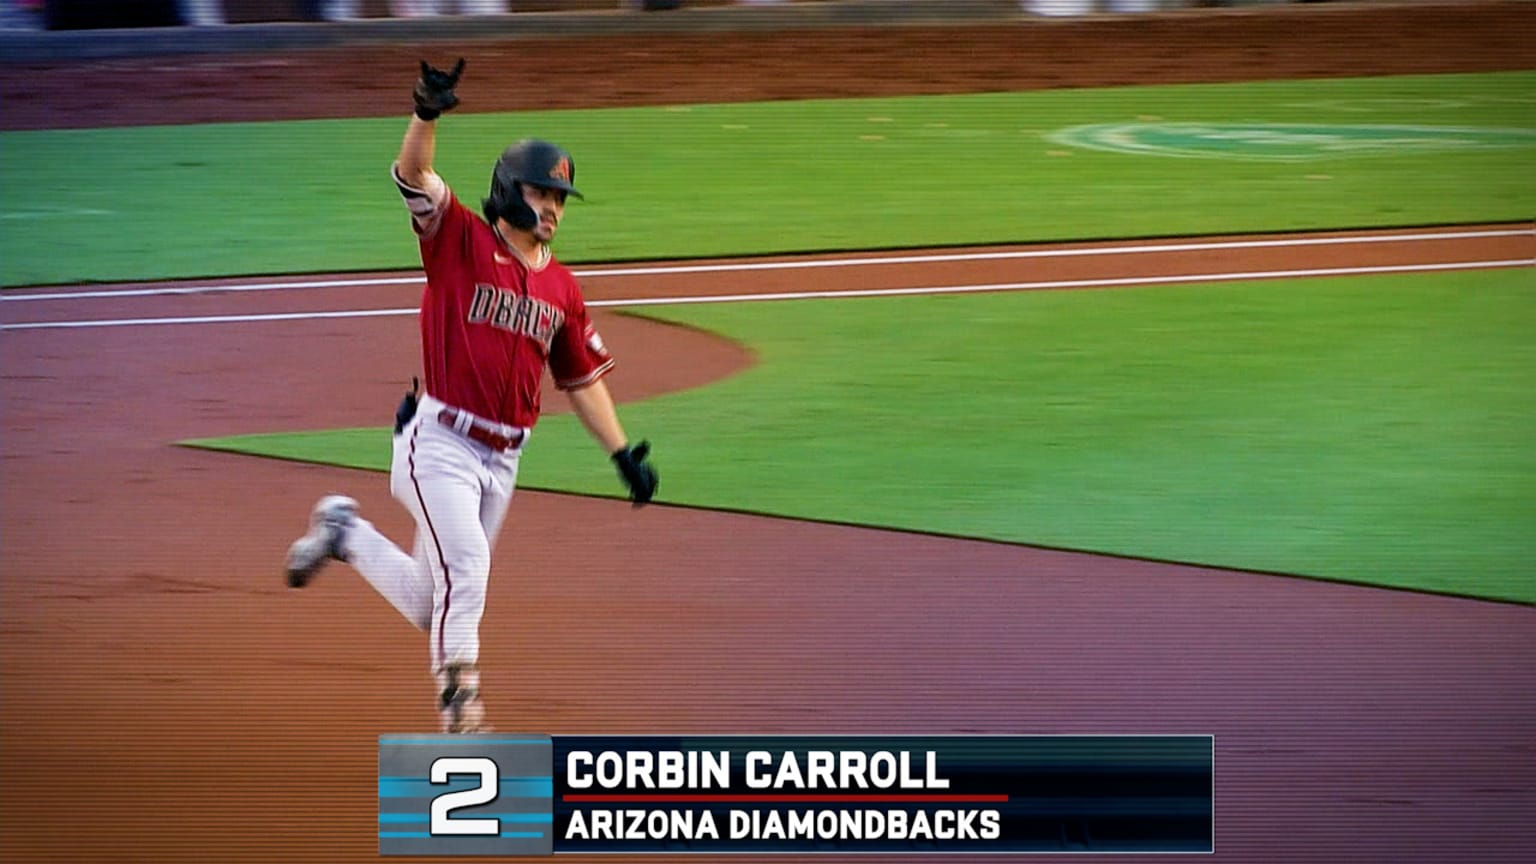 Corbin Carroll is MLB's unconventional, sensational rookie superstar